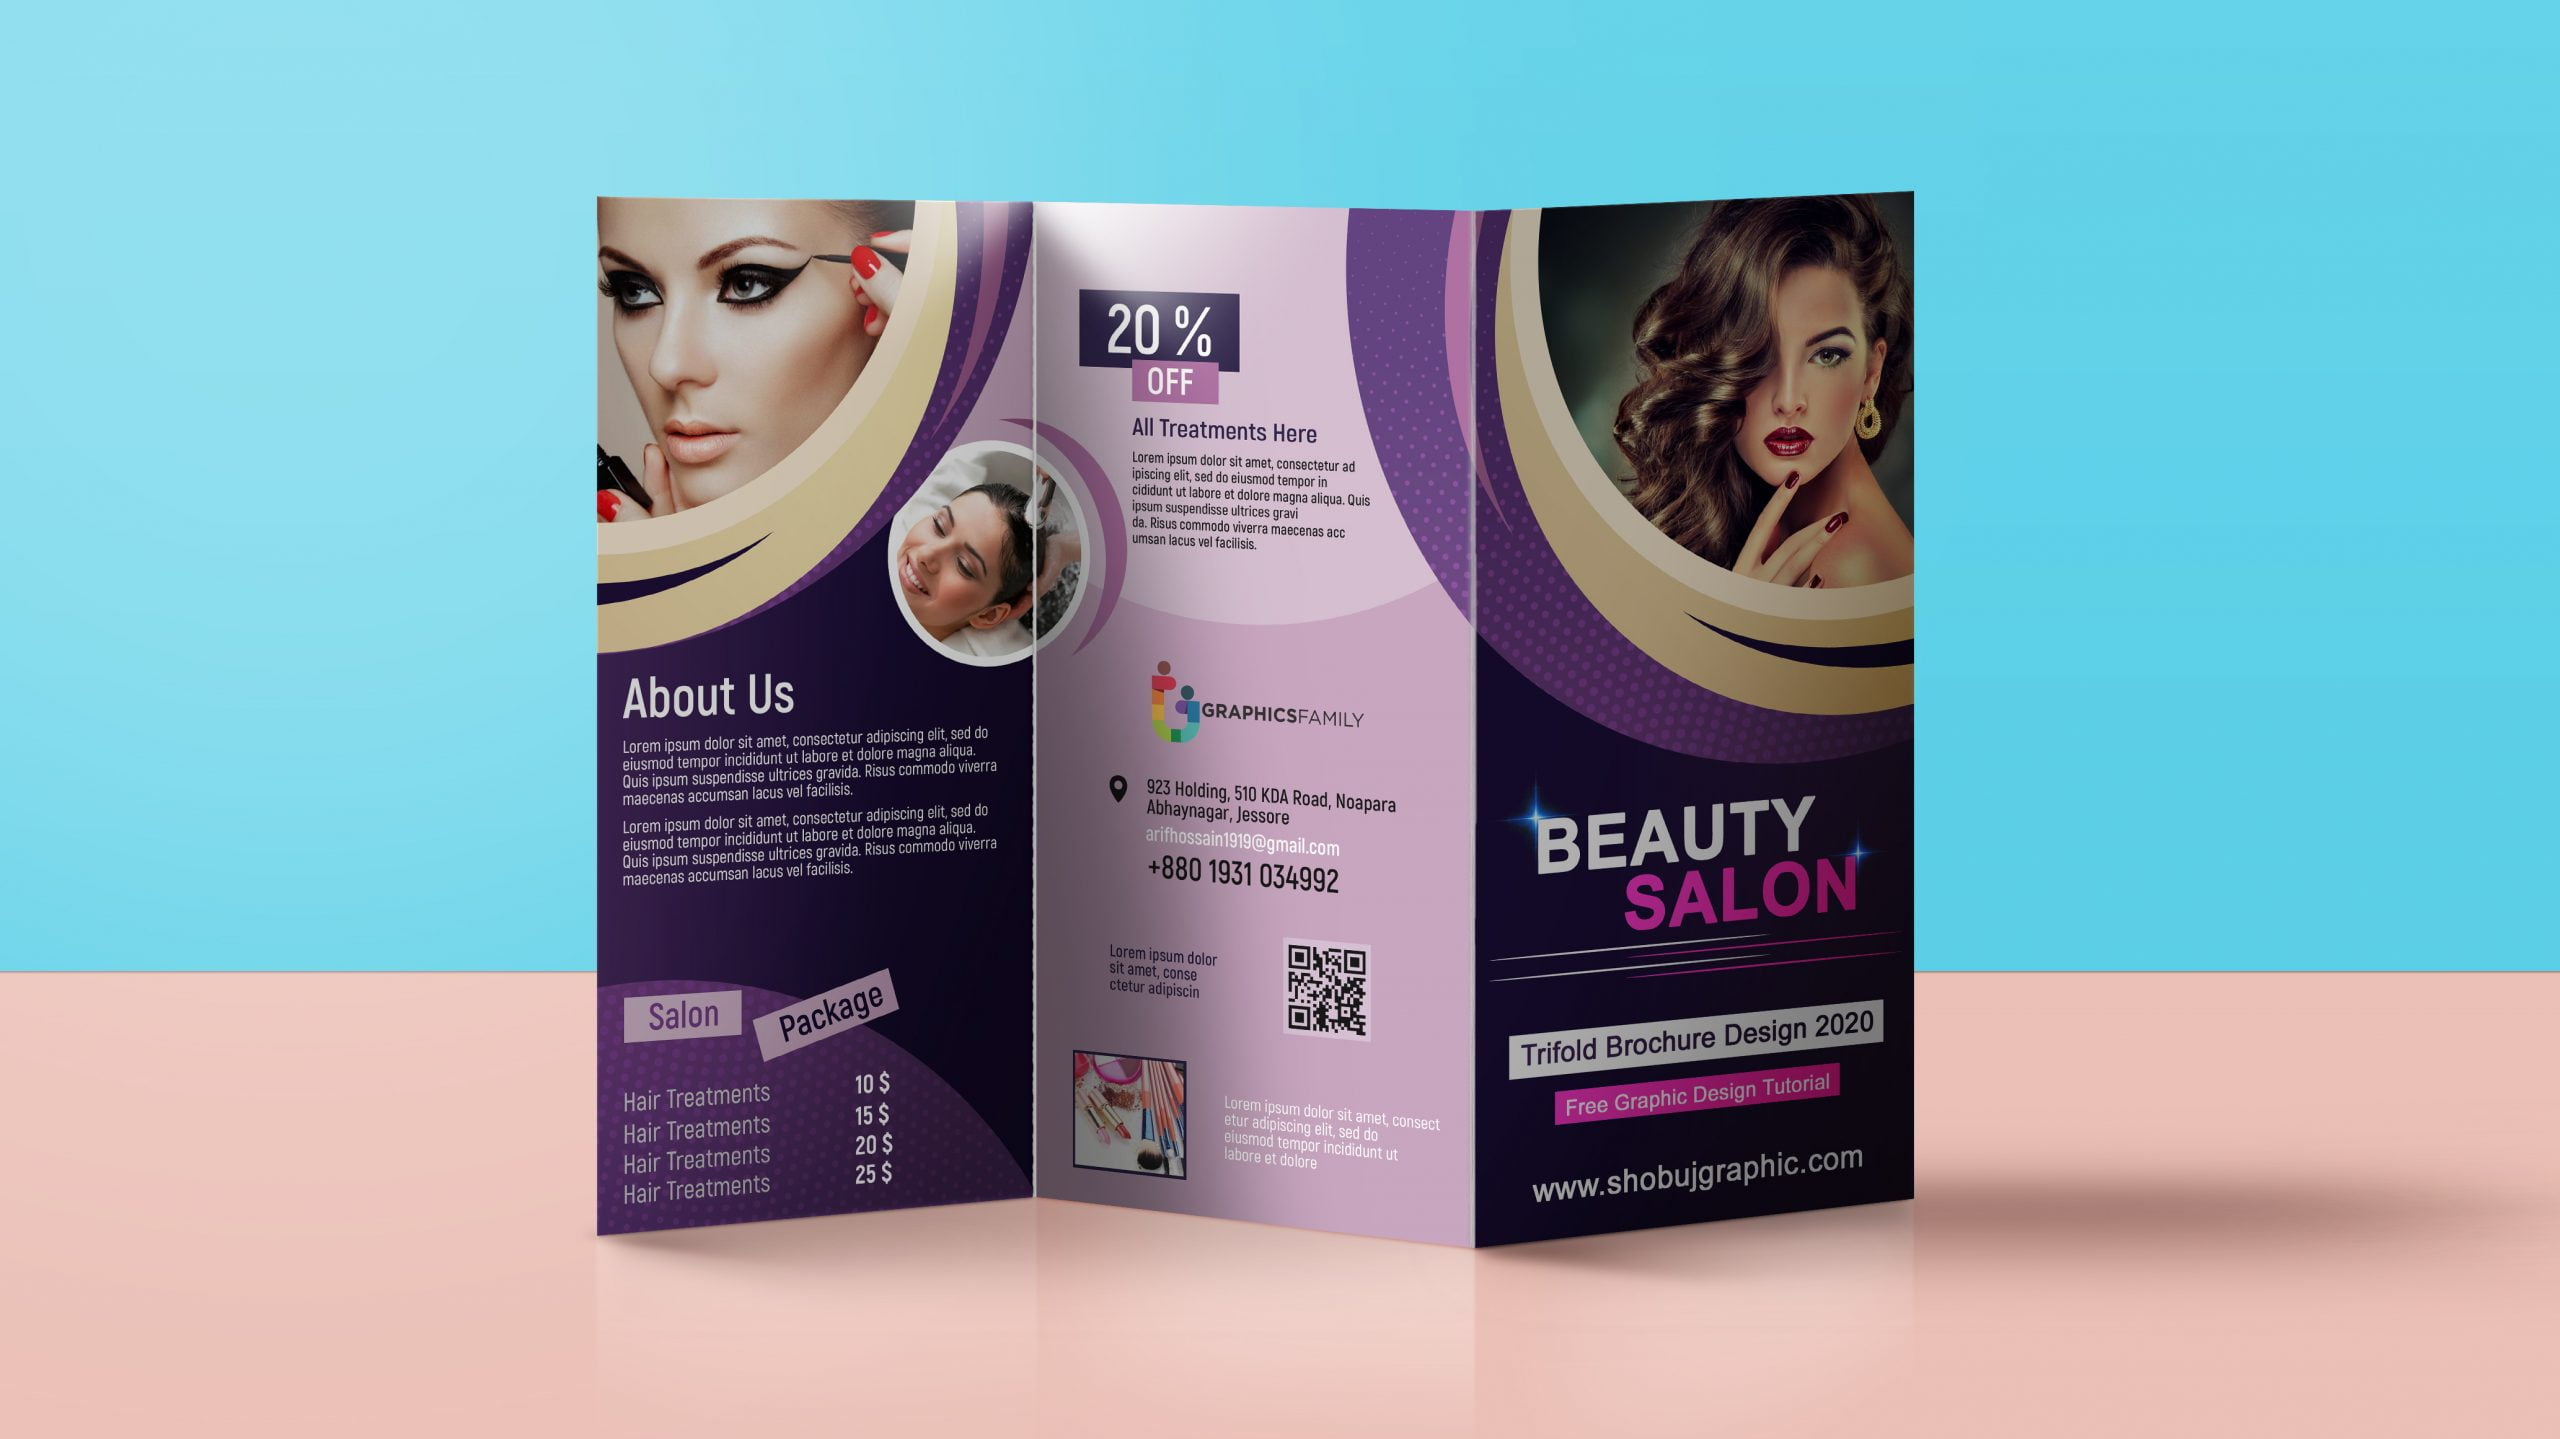 Beauty Salon tri fold brochure design presentation